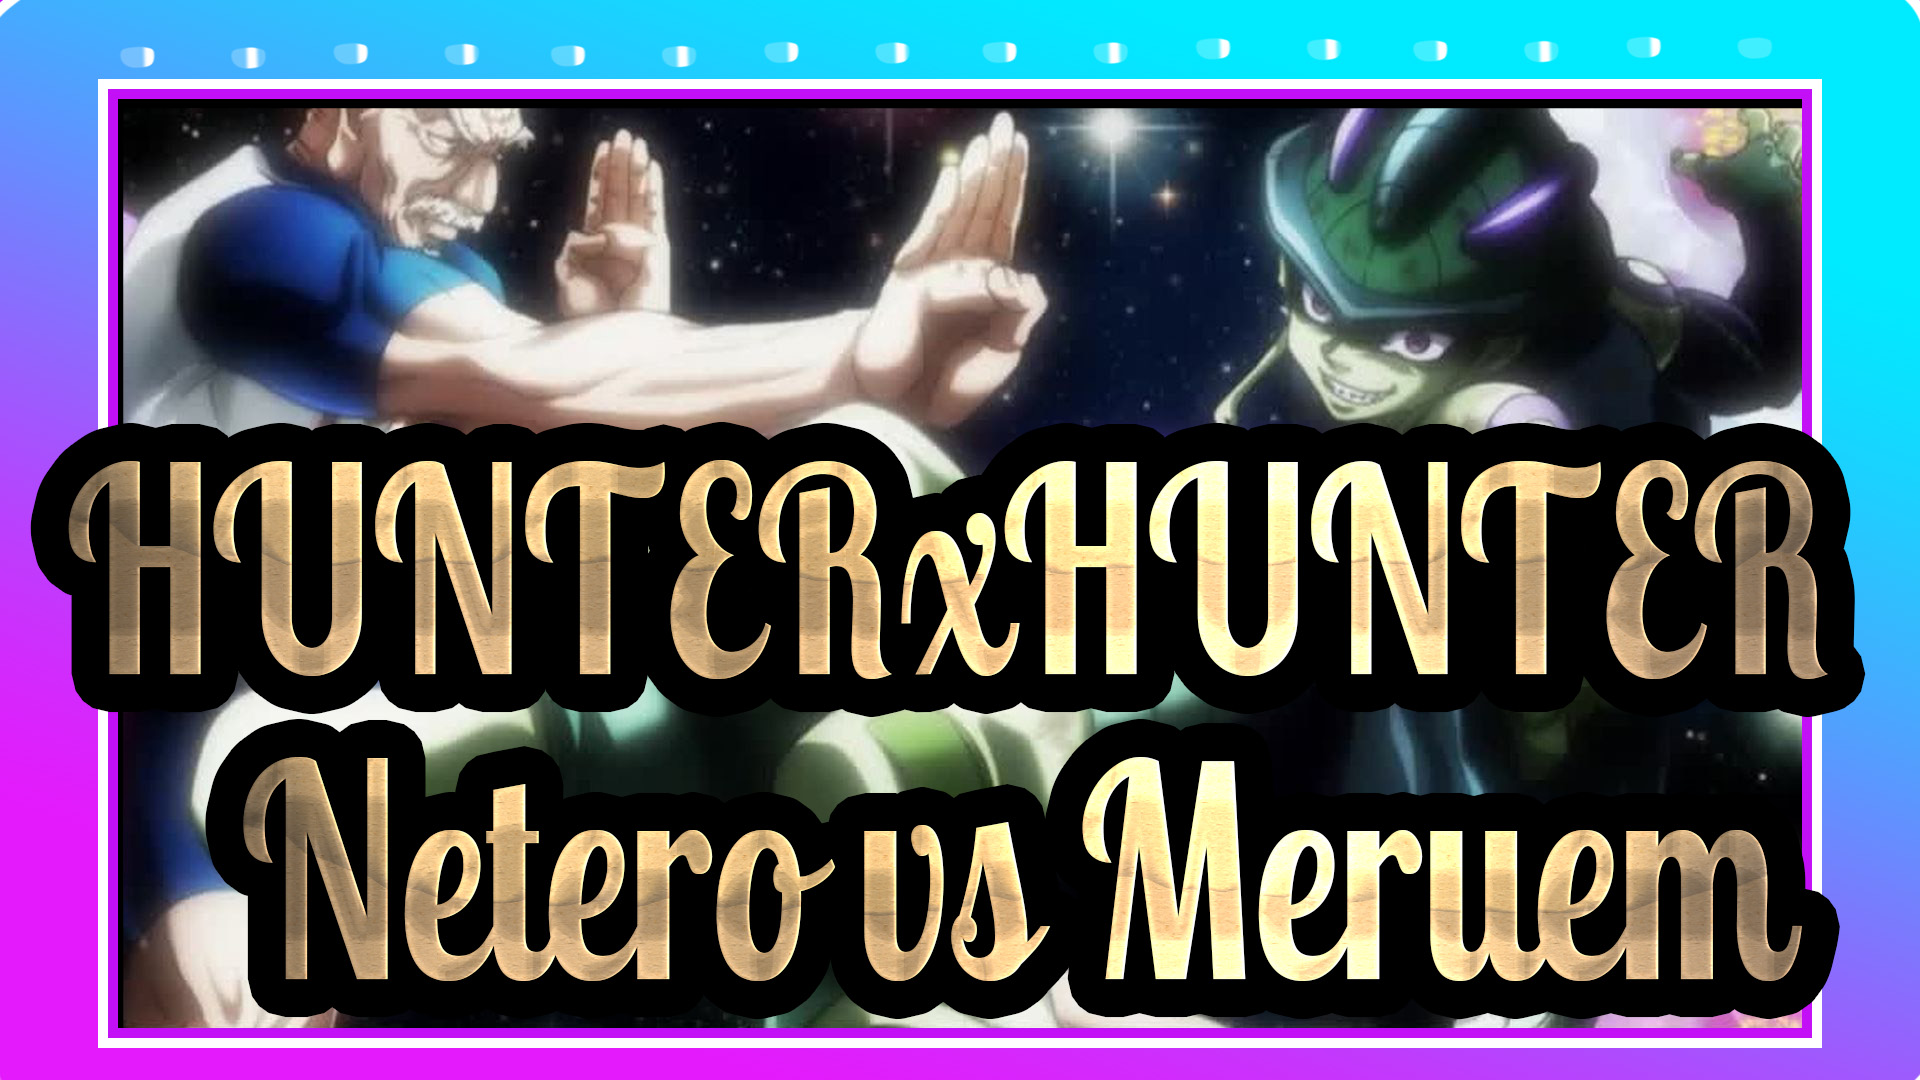 NETERO VS MERUEM!